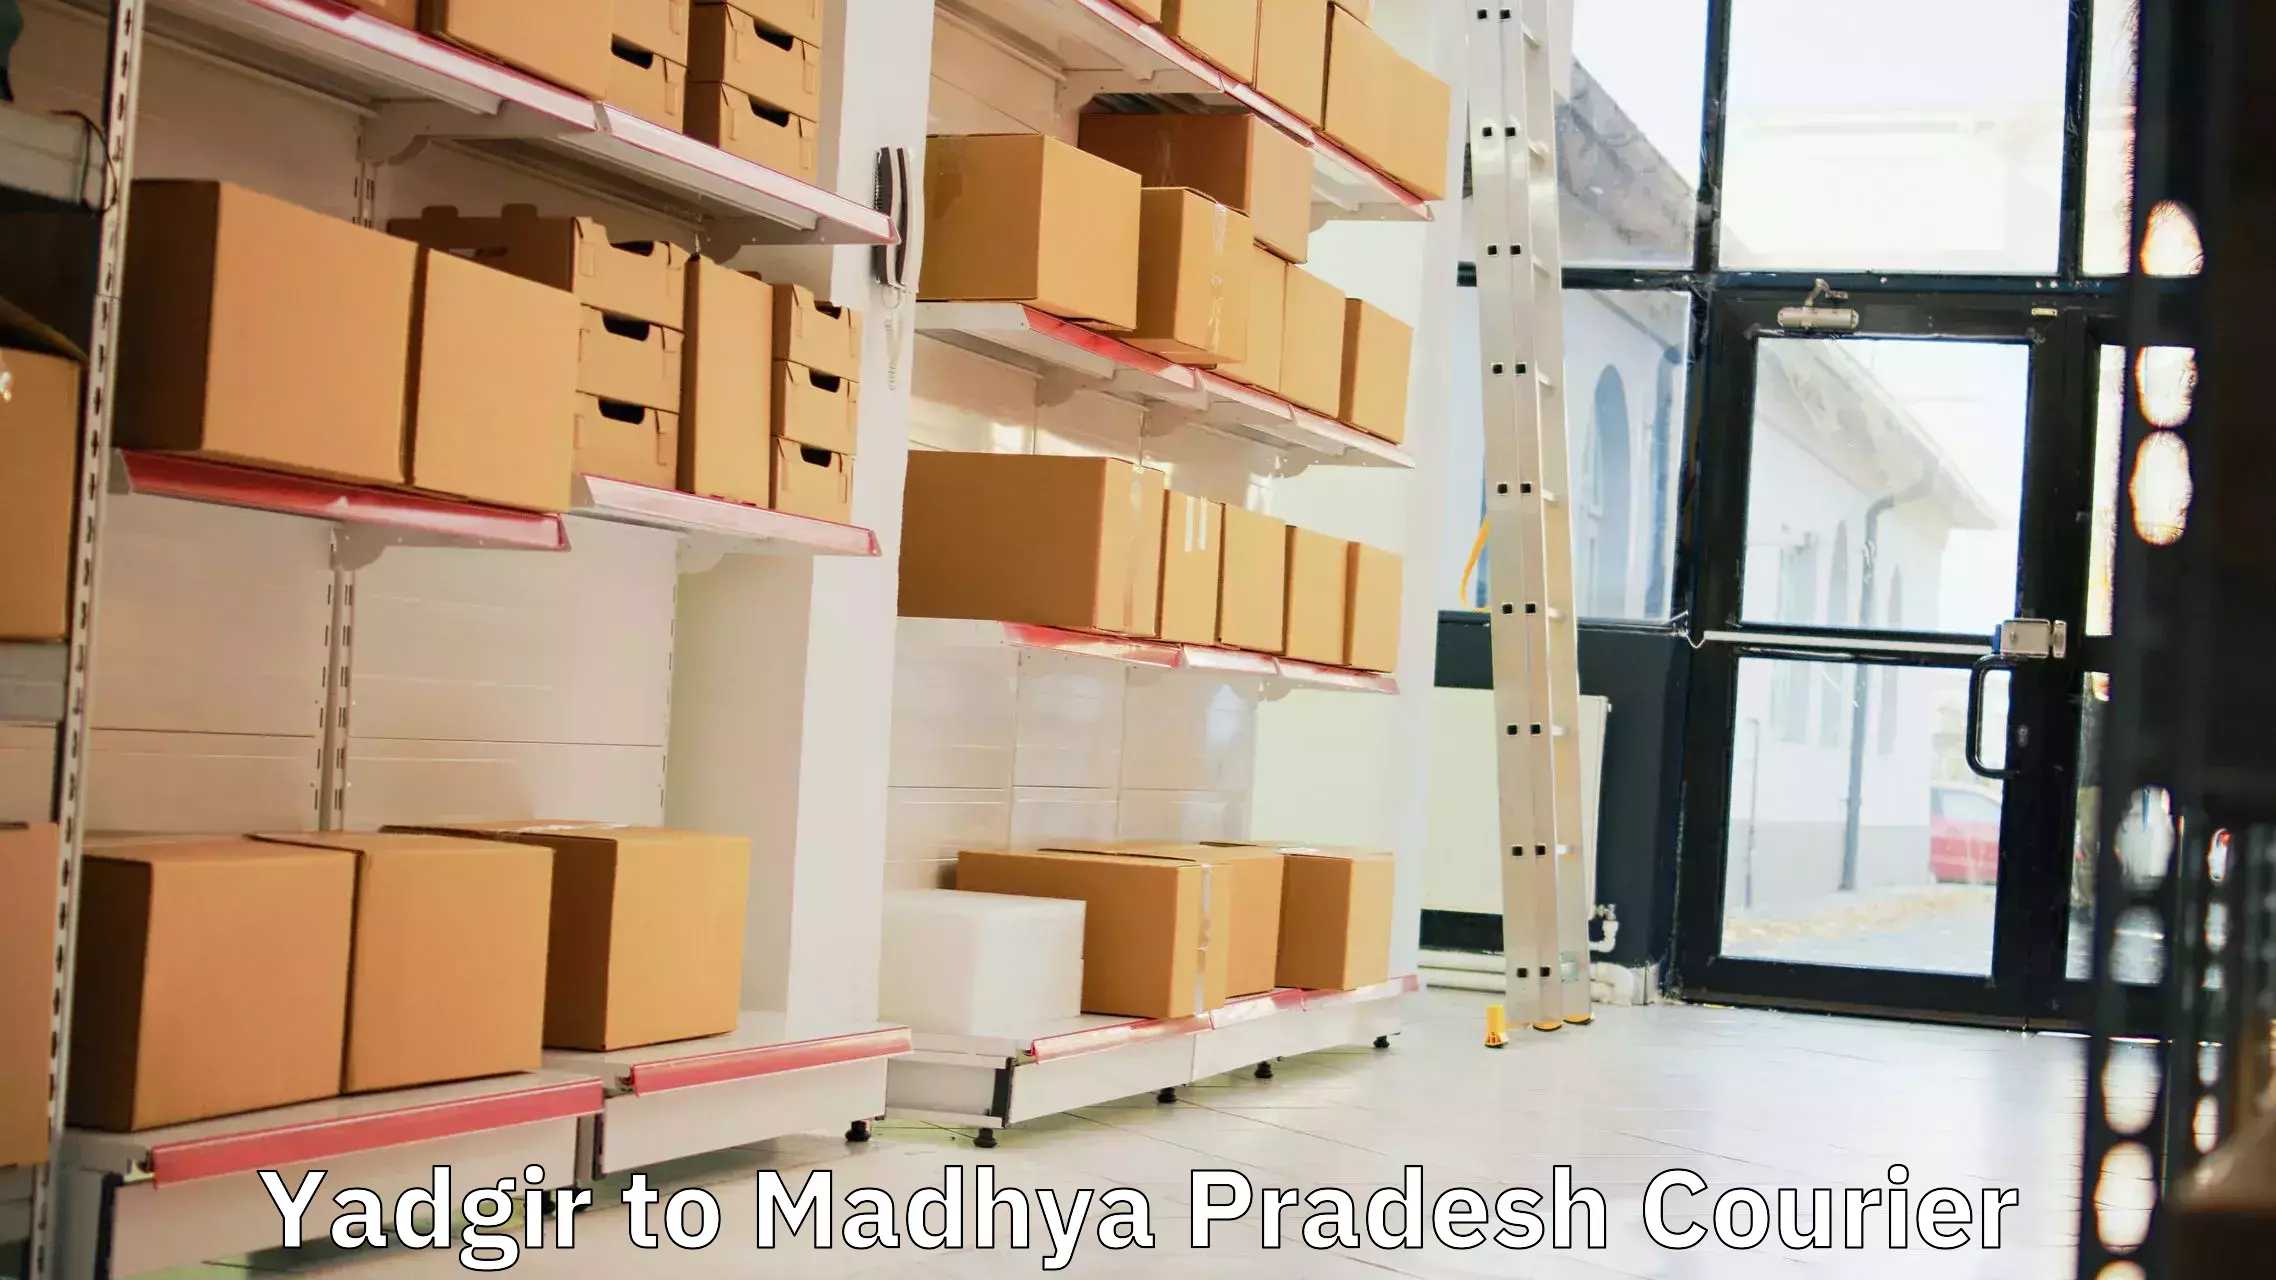 Courier service innovation Yadgir to Madhya Pradesh